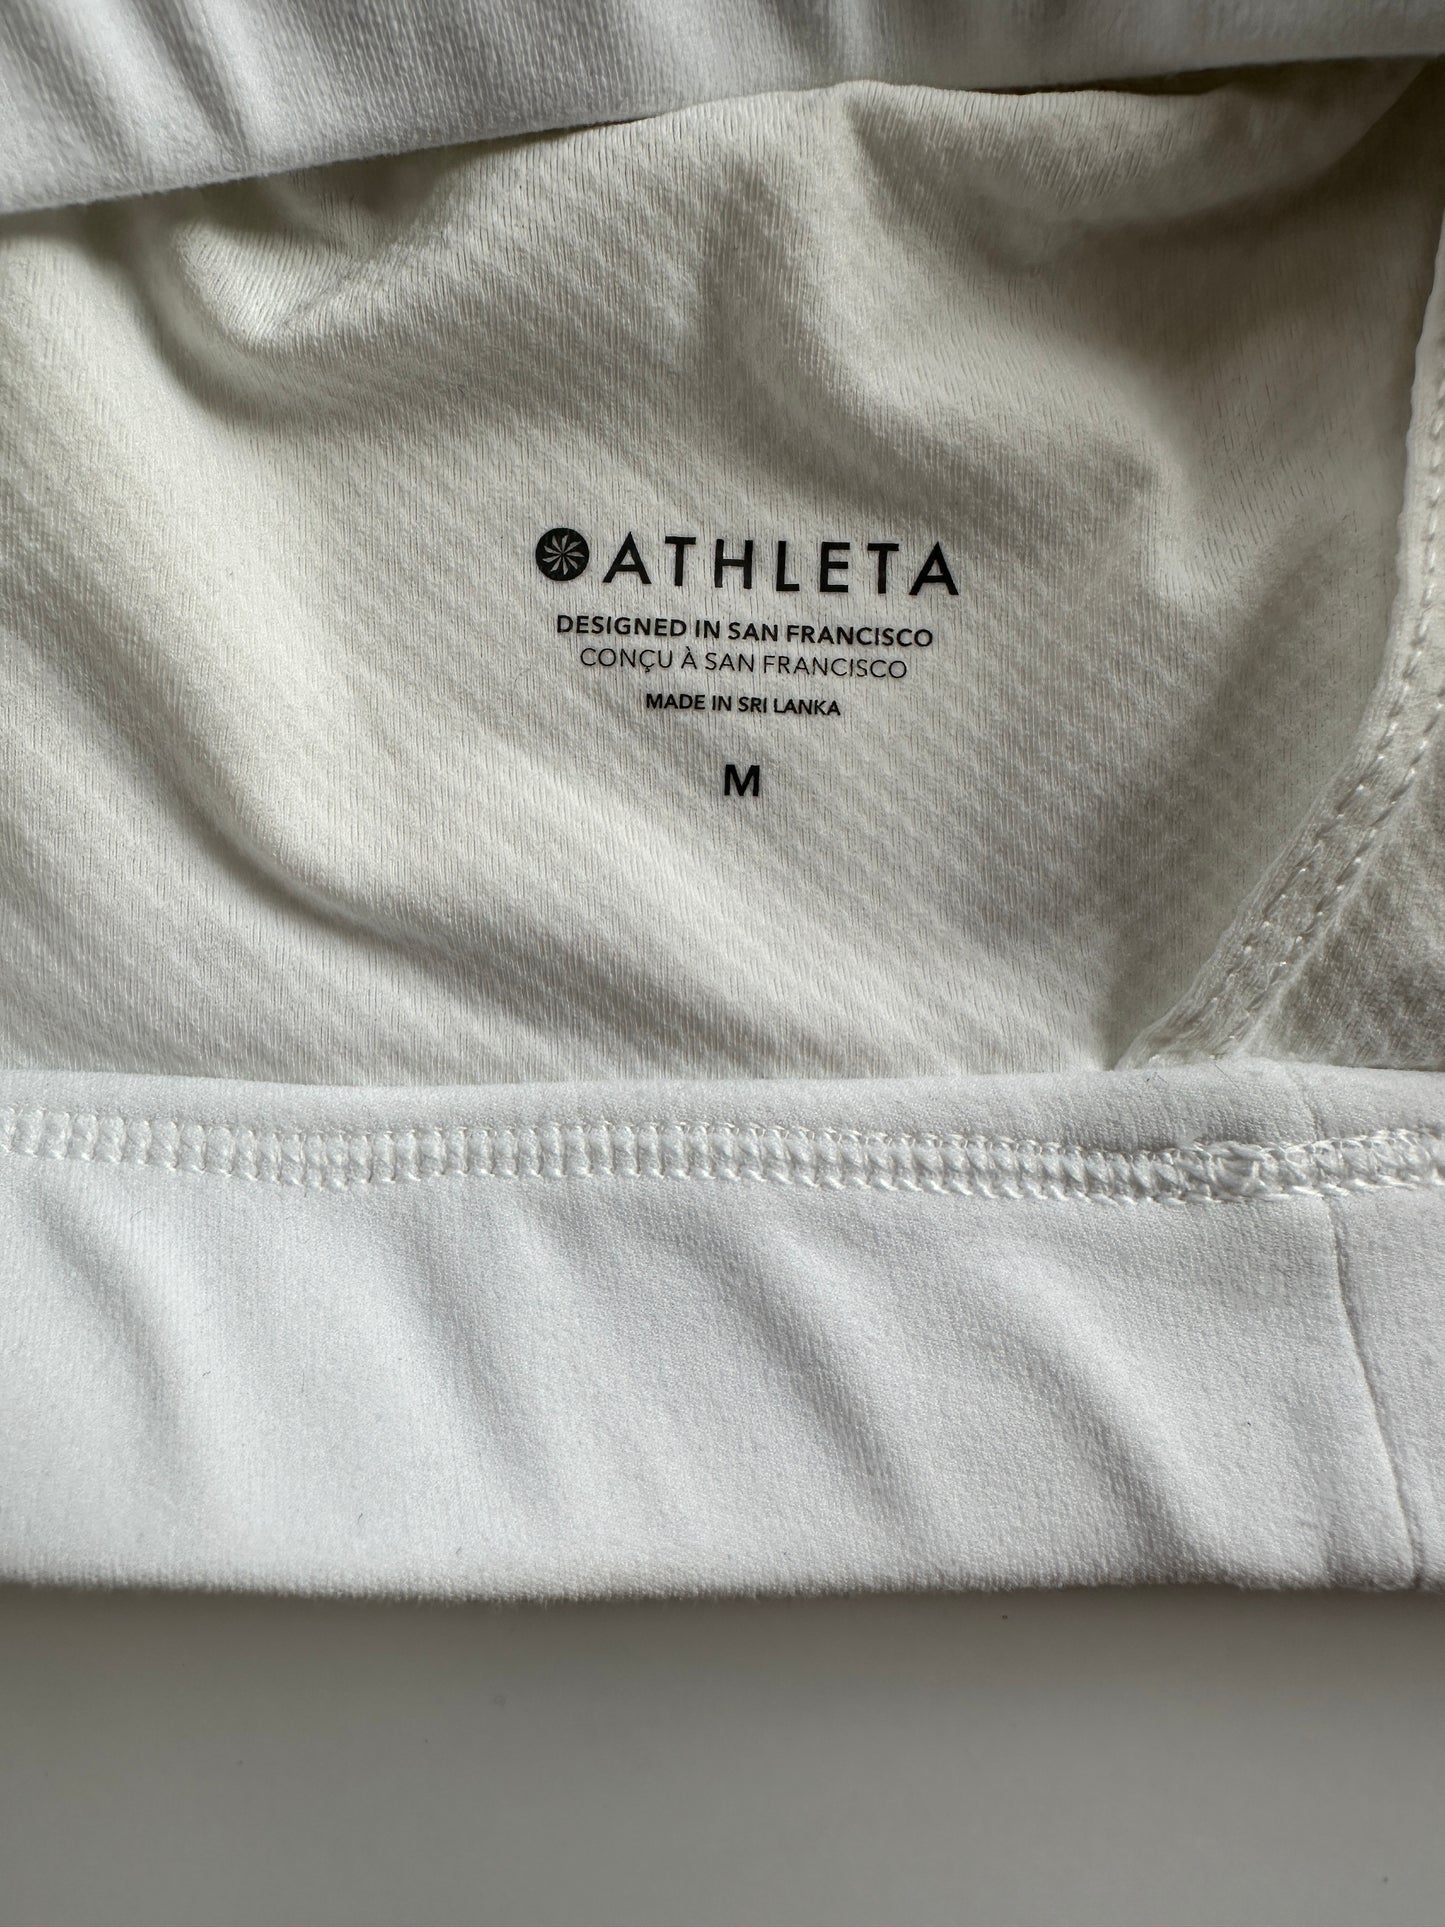 Athleta Women’s Exhale Sports Bra D-DD+ Medium, white worn a few times